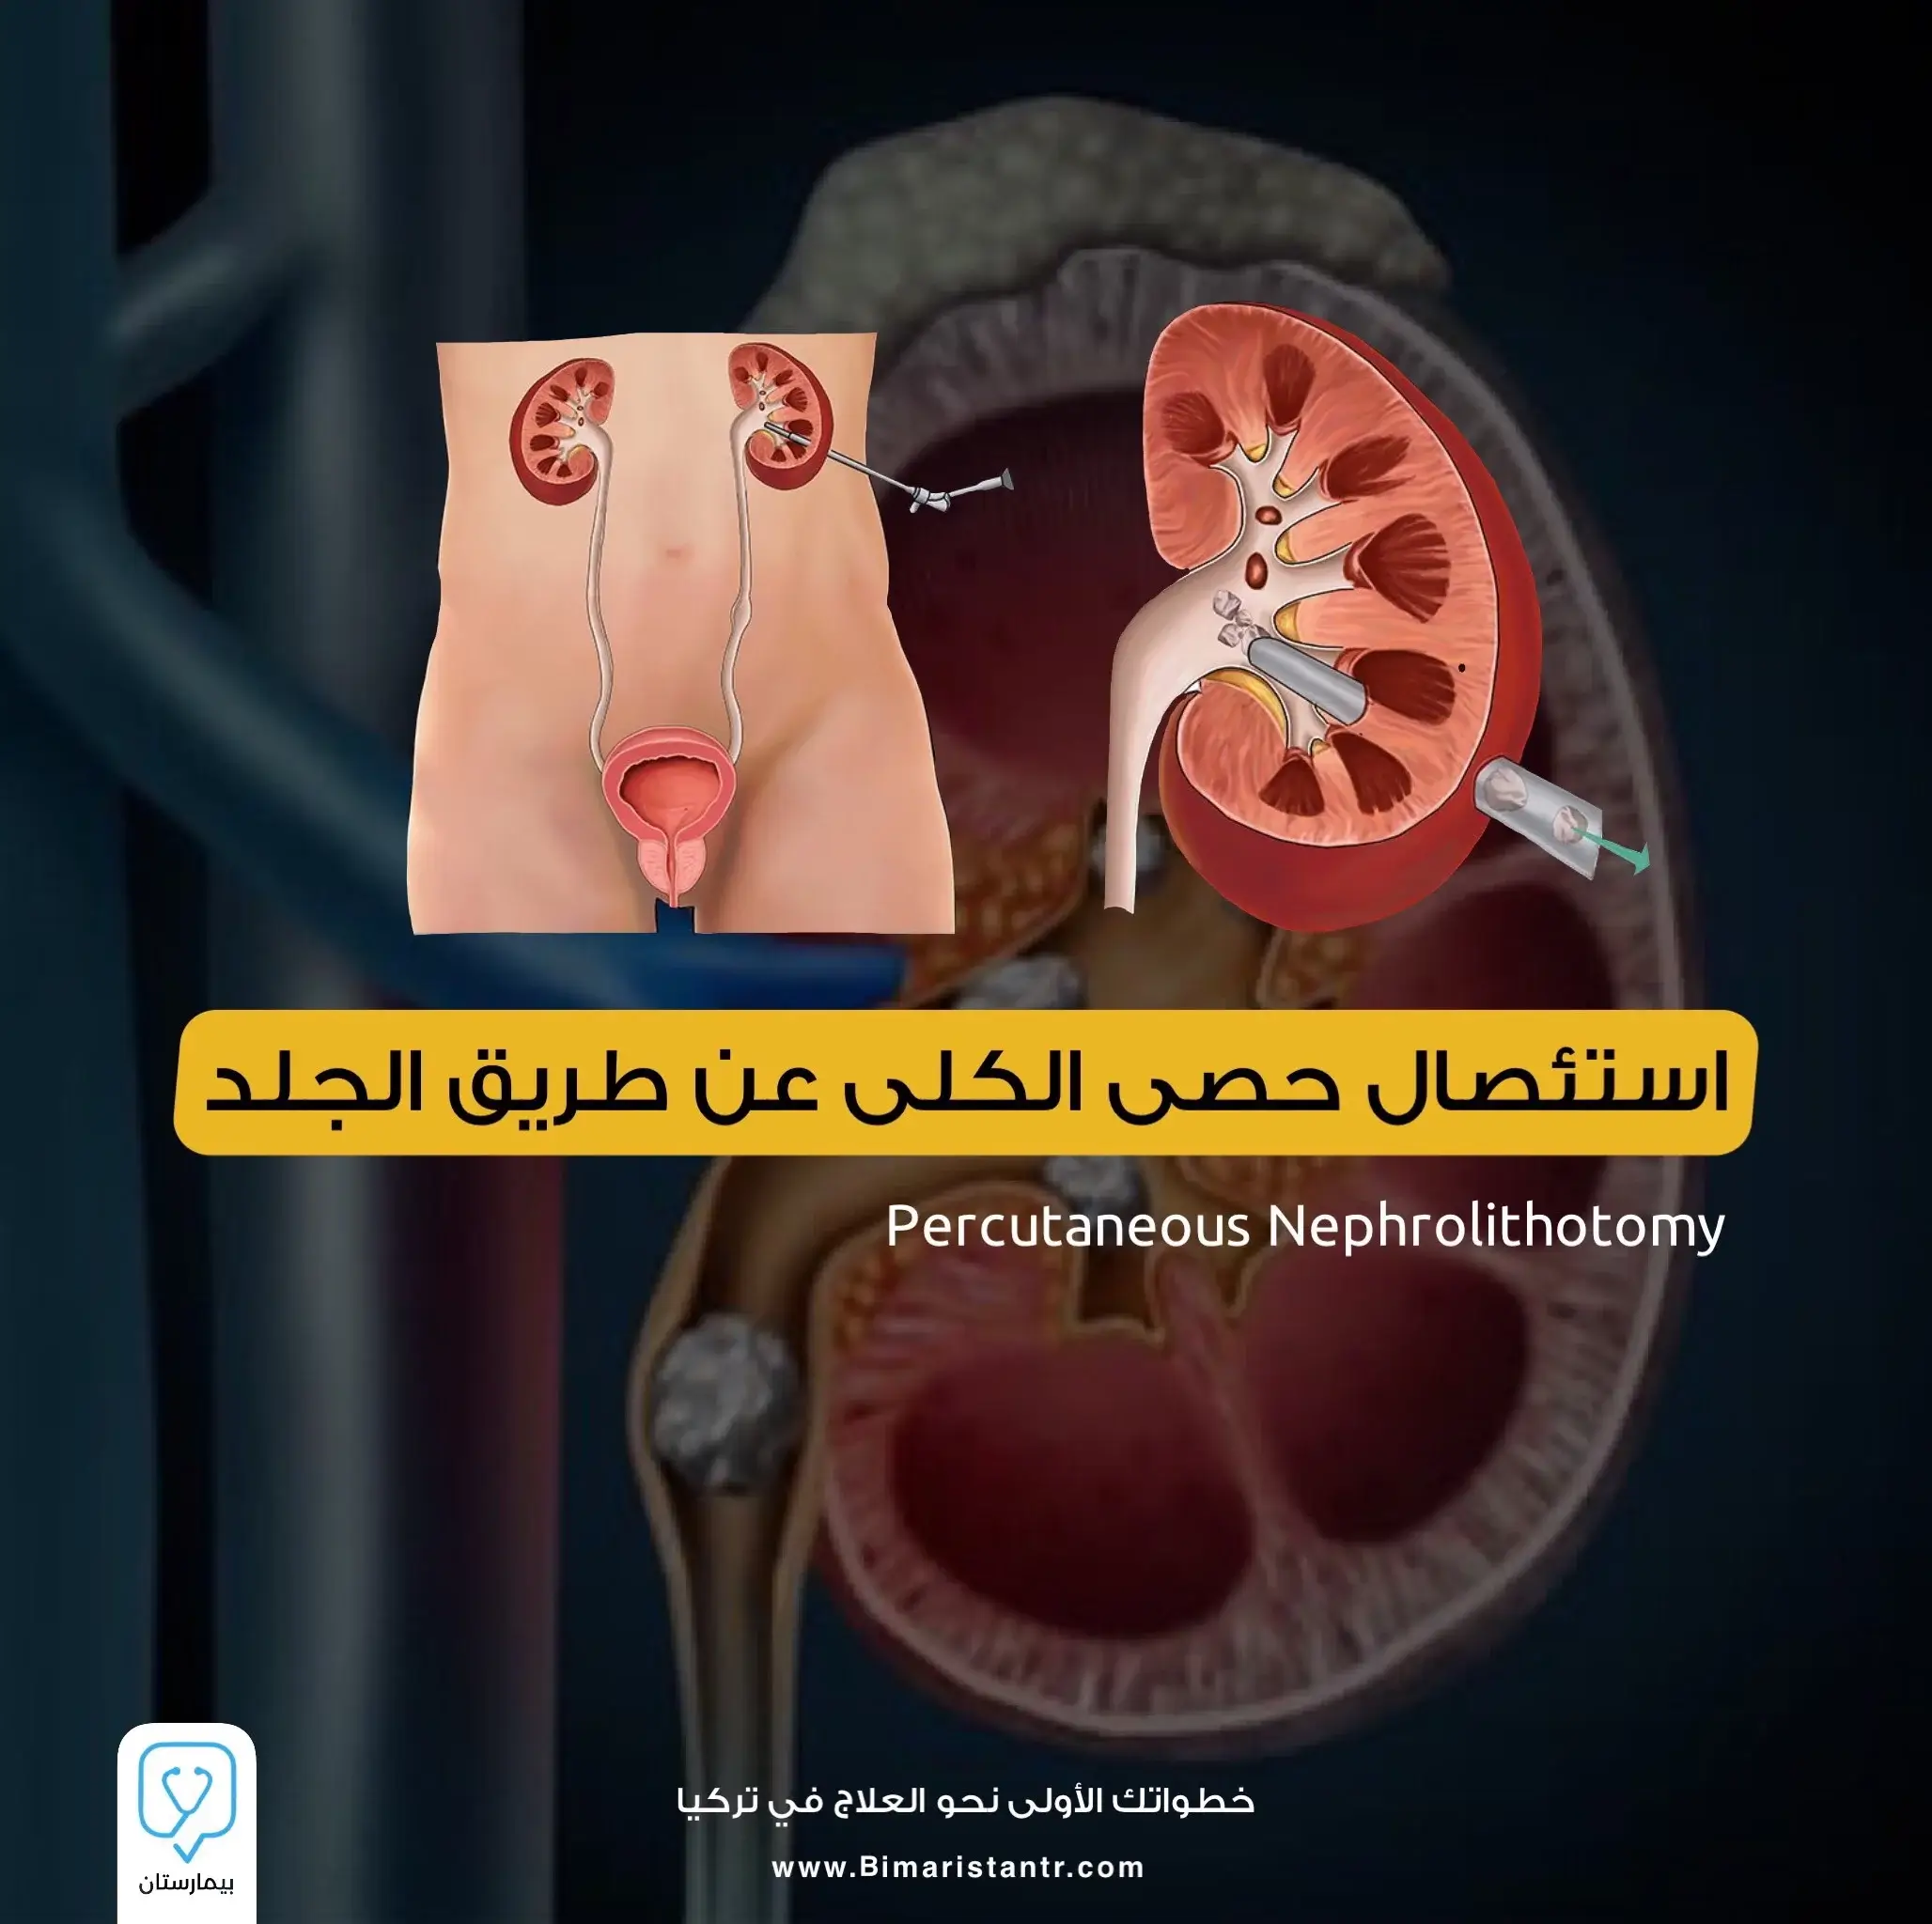 Percutaneous excision of kidney stones